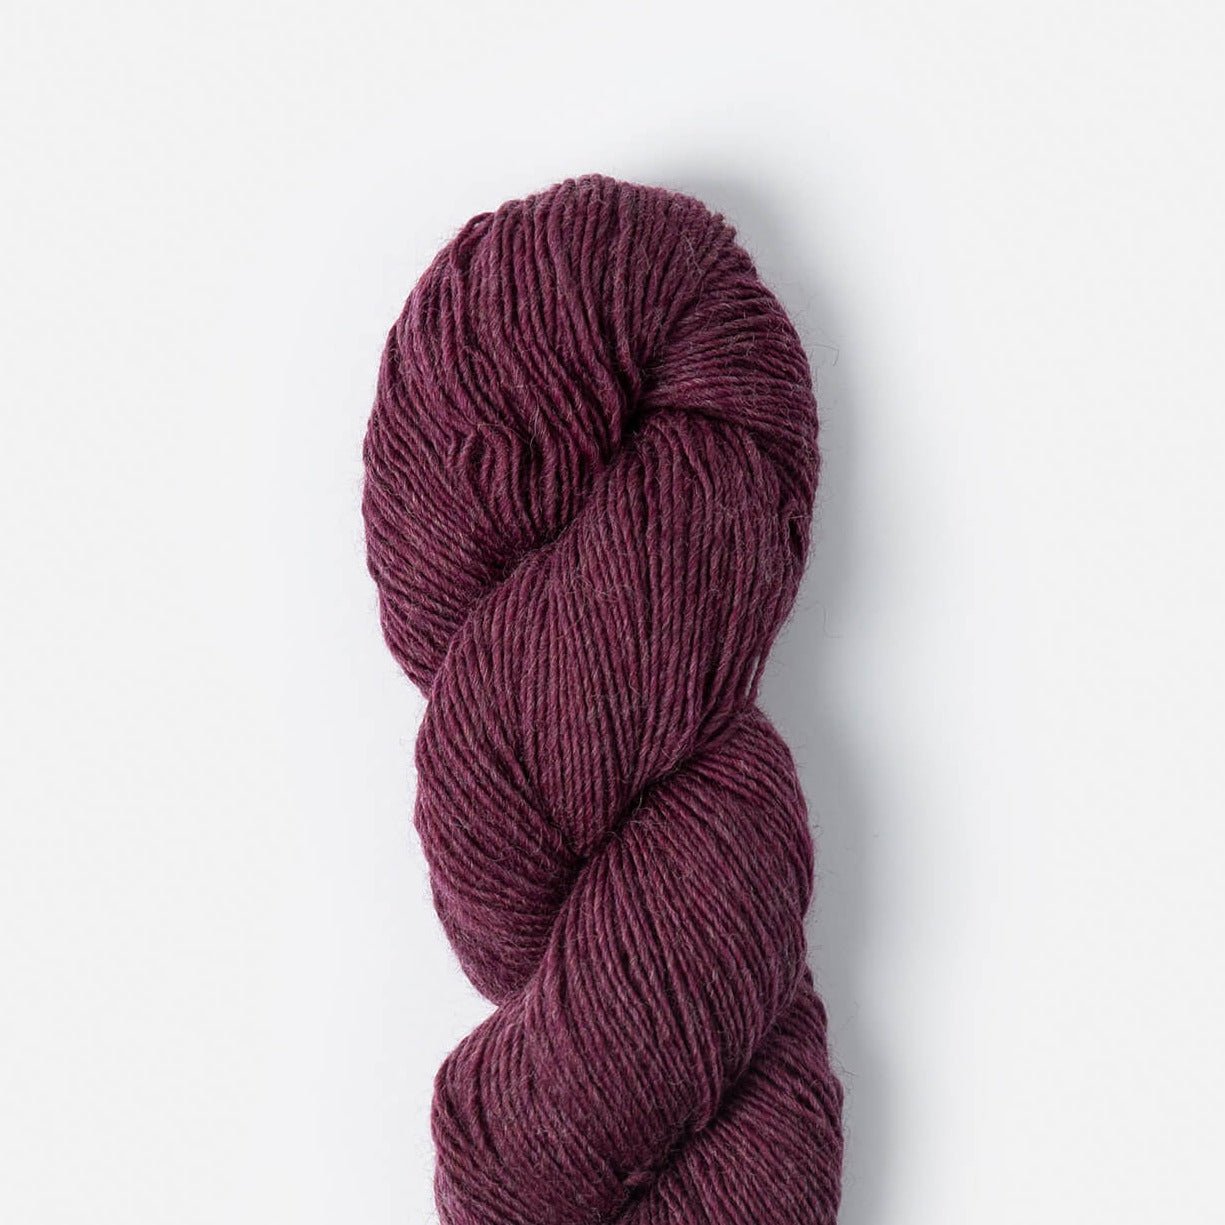 Tivoli Shawl Knitting Kit - Mary Pranica - 2307 Pressed Grapes - The Little Yarn Store